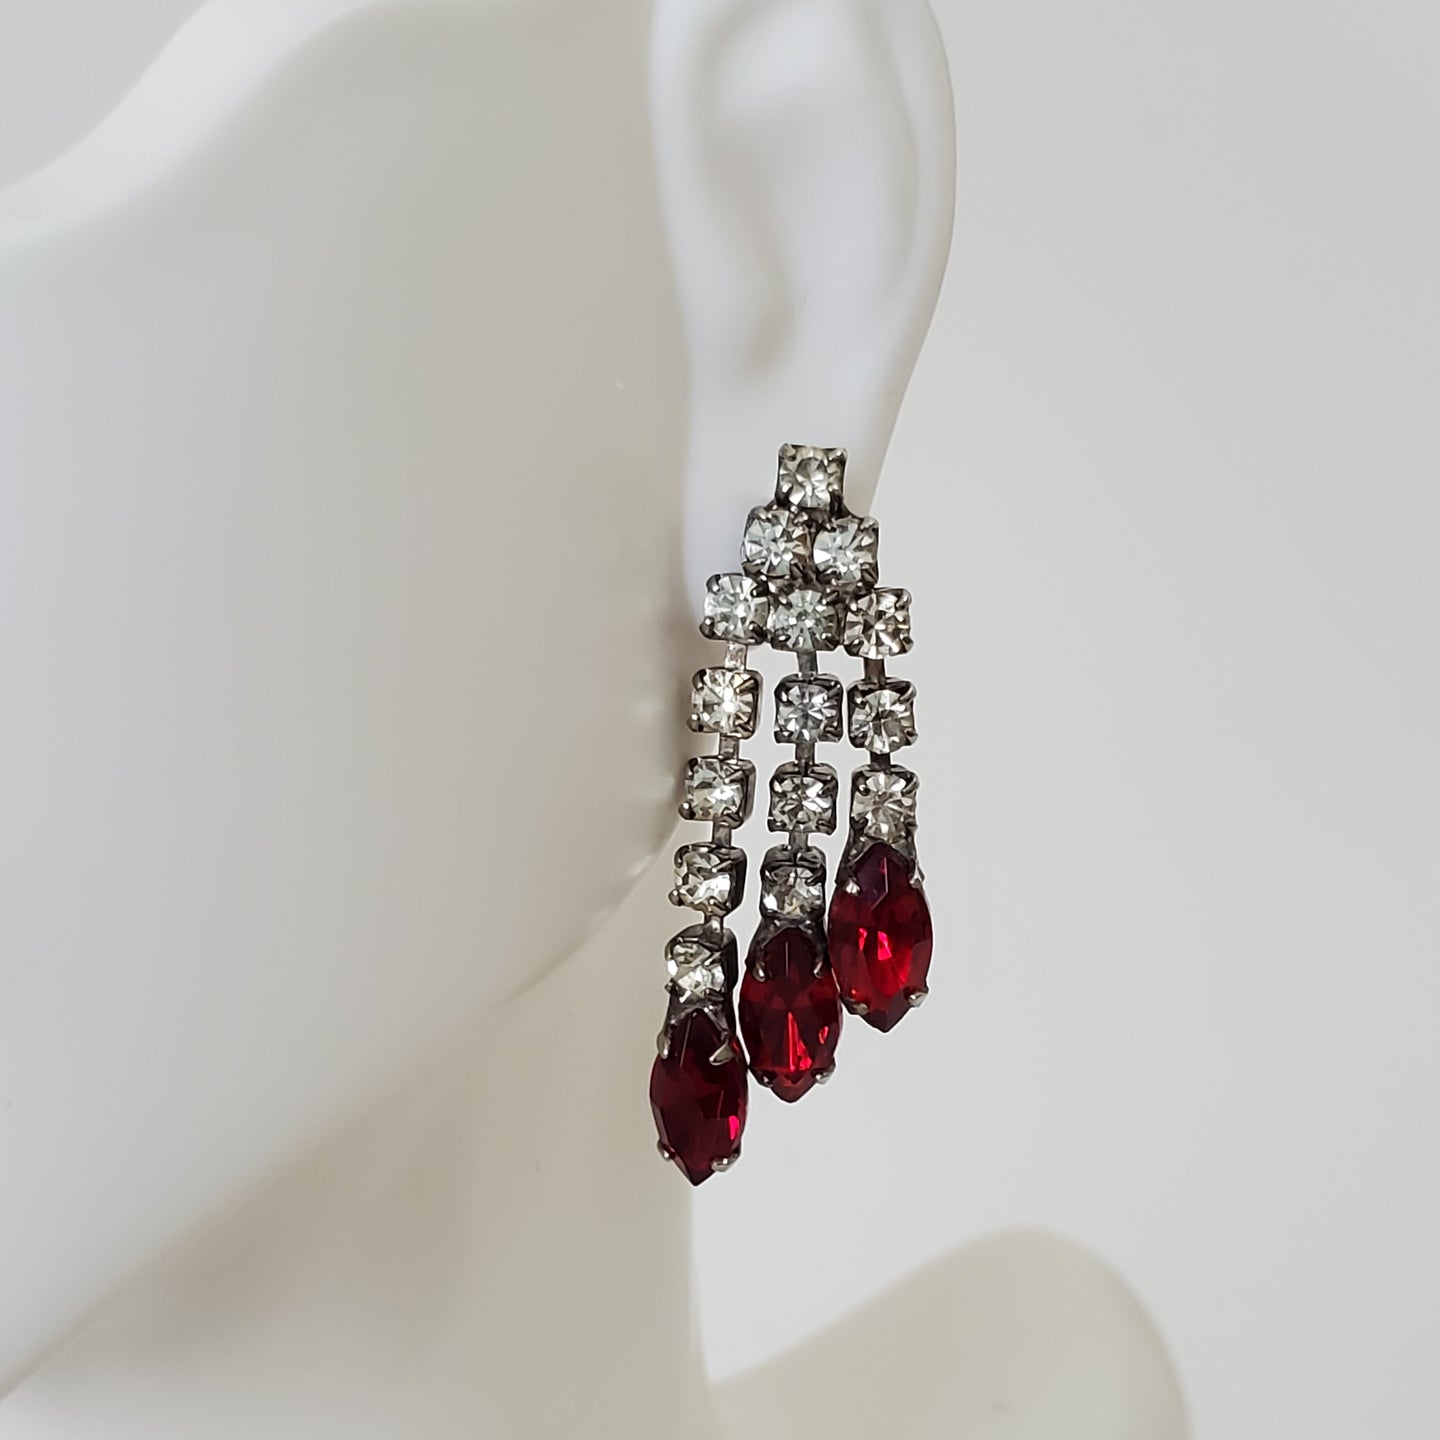 Vintage Rhinestone Drop Earrings with Red Glass Gems